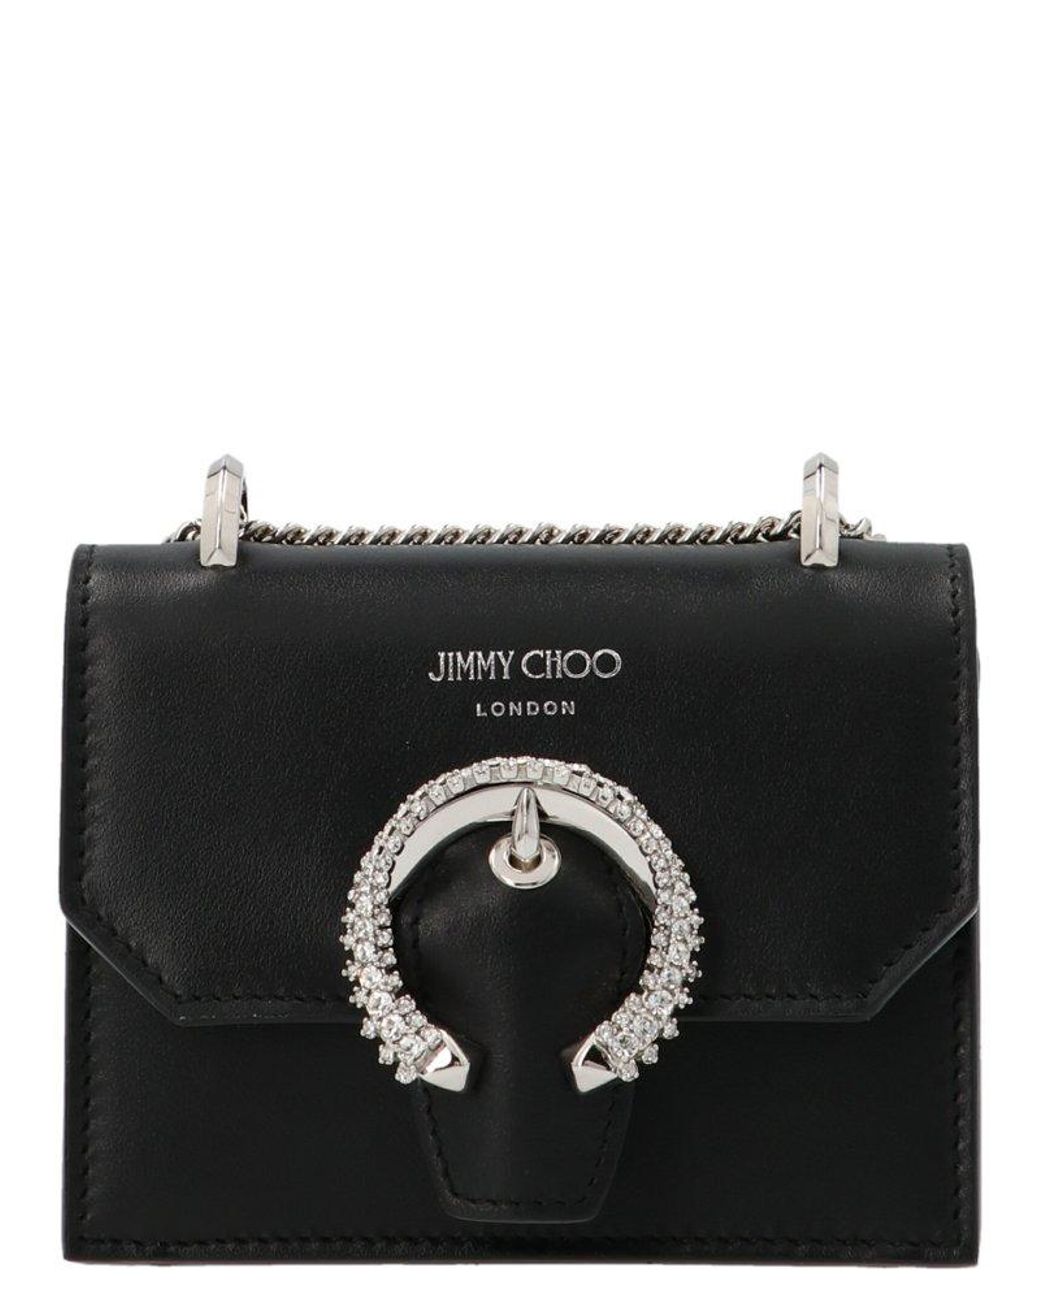 Jimmy Choo Leather Mini Paris Crossbody Bag in Black | Lyst